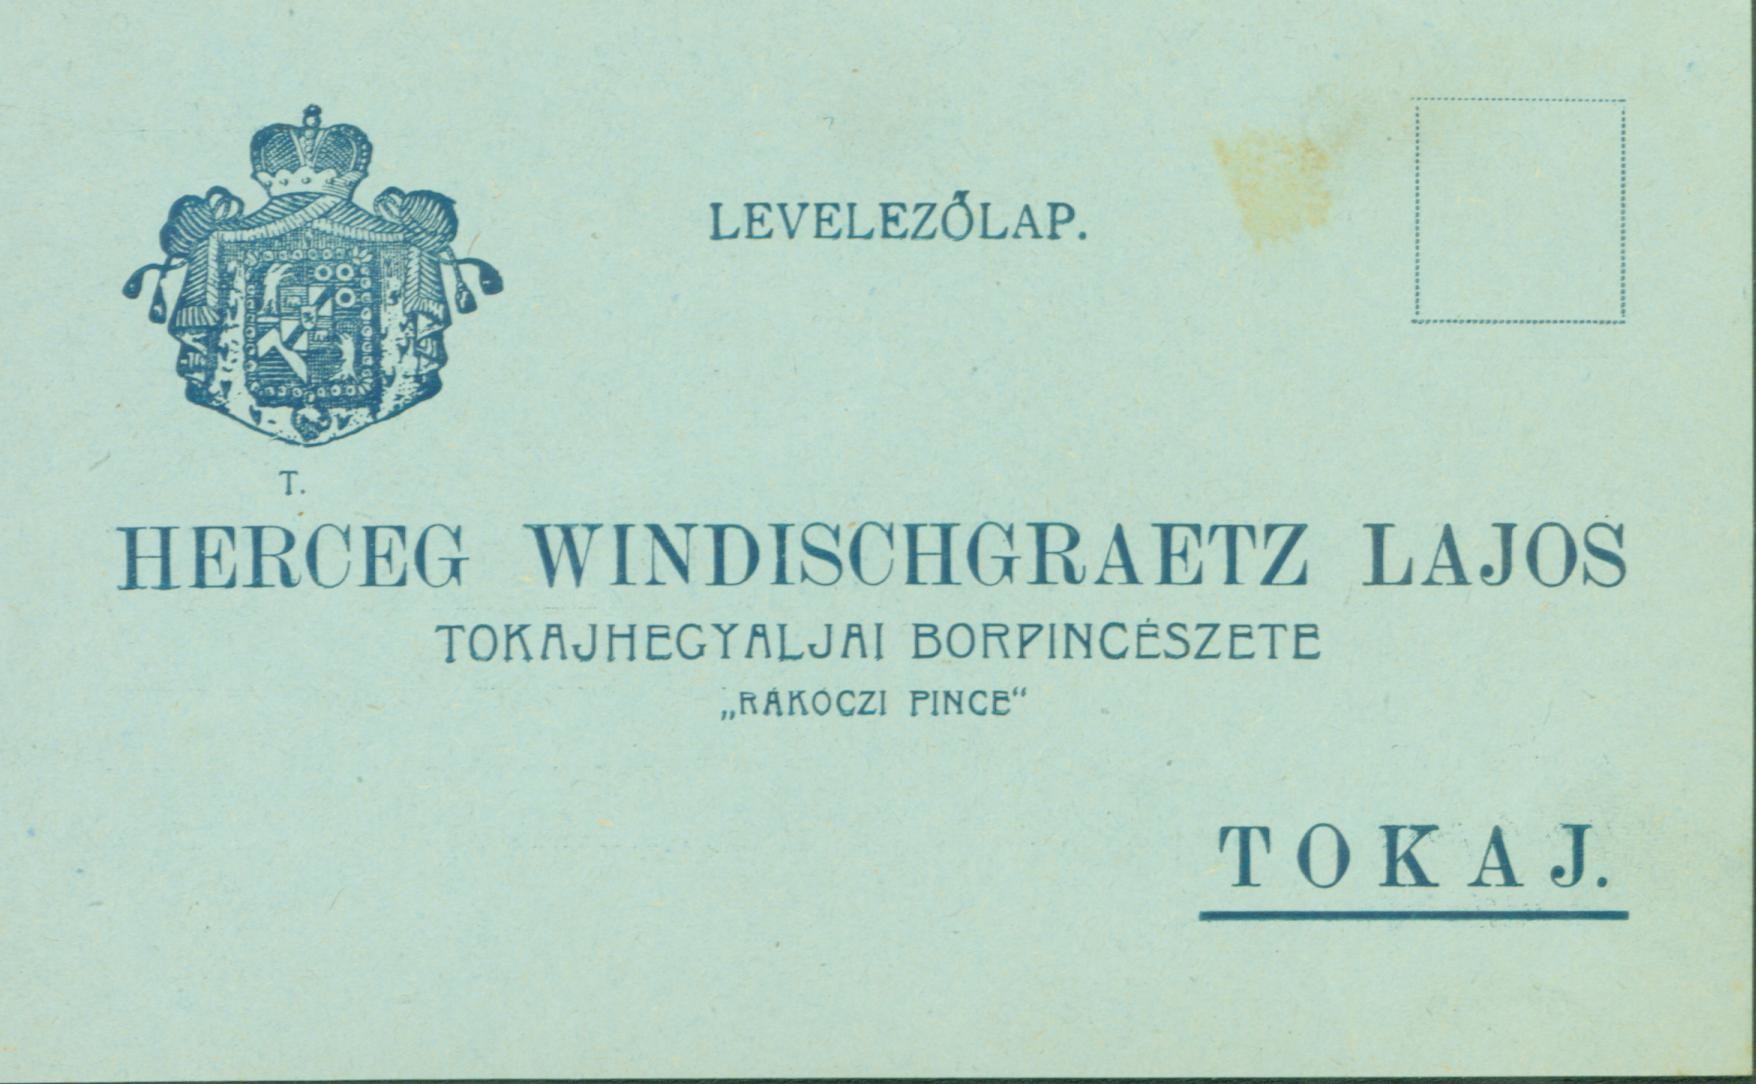 Levelezőlap, tokaji Rákóczi Pince (Ferenczy Múzeumi Centrum CC BY-NC-SA)